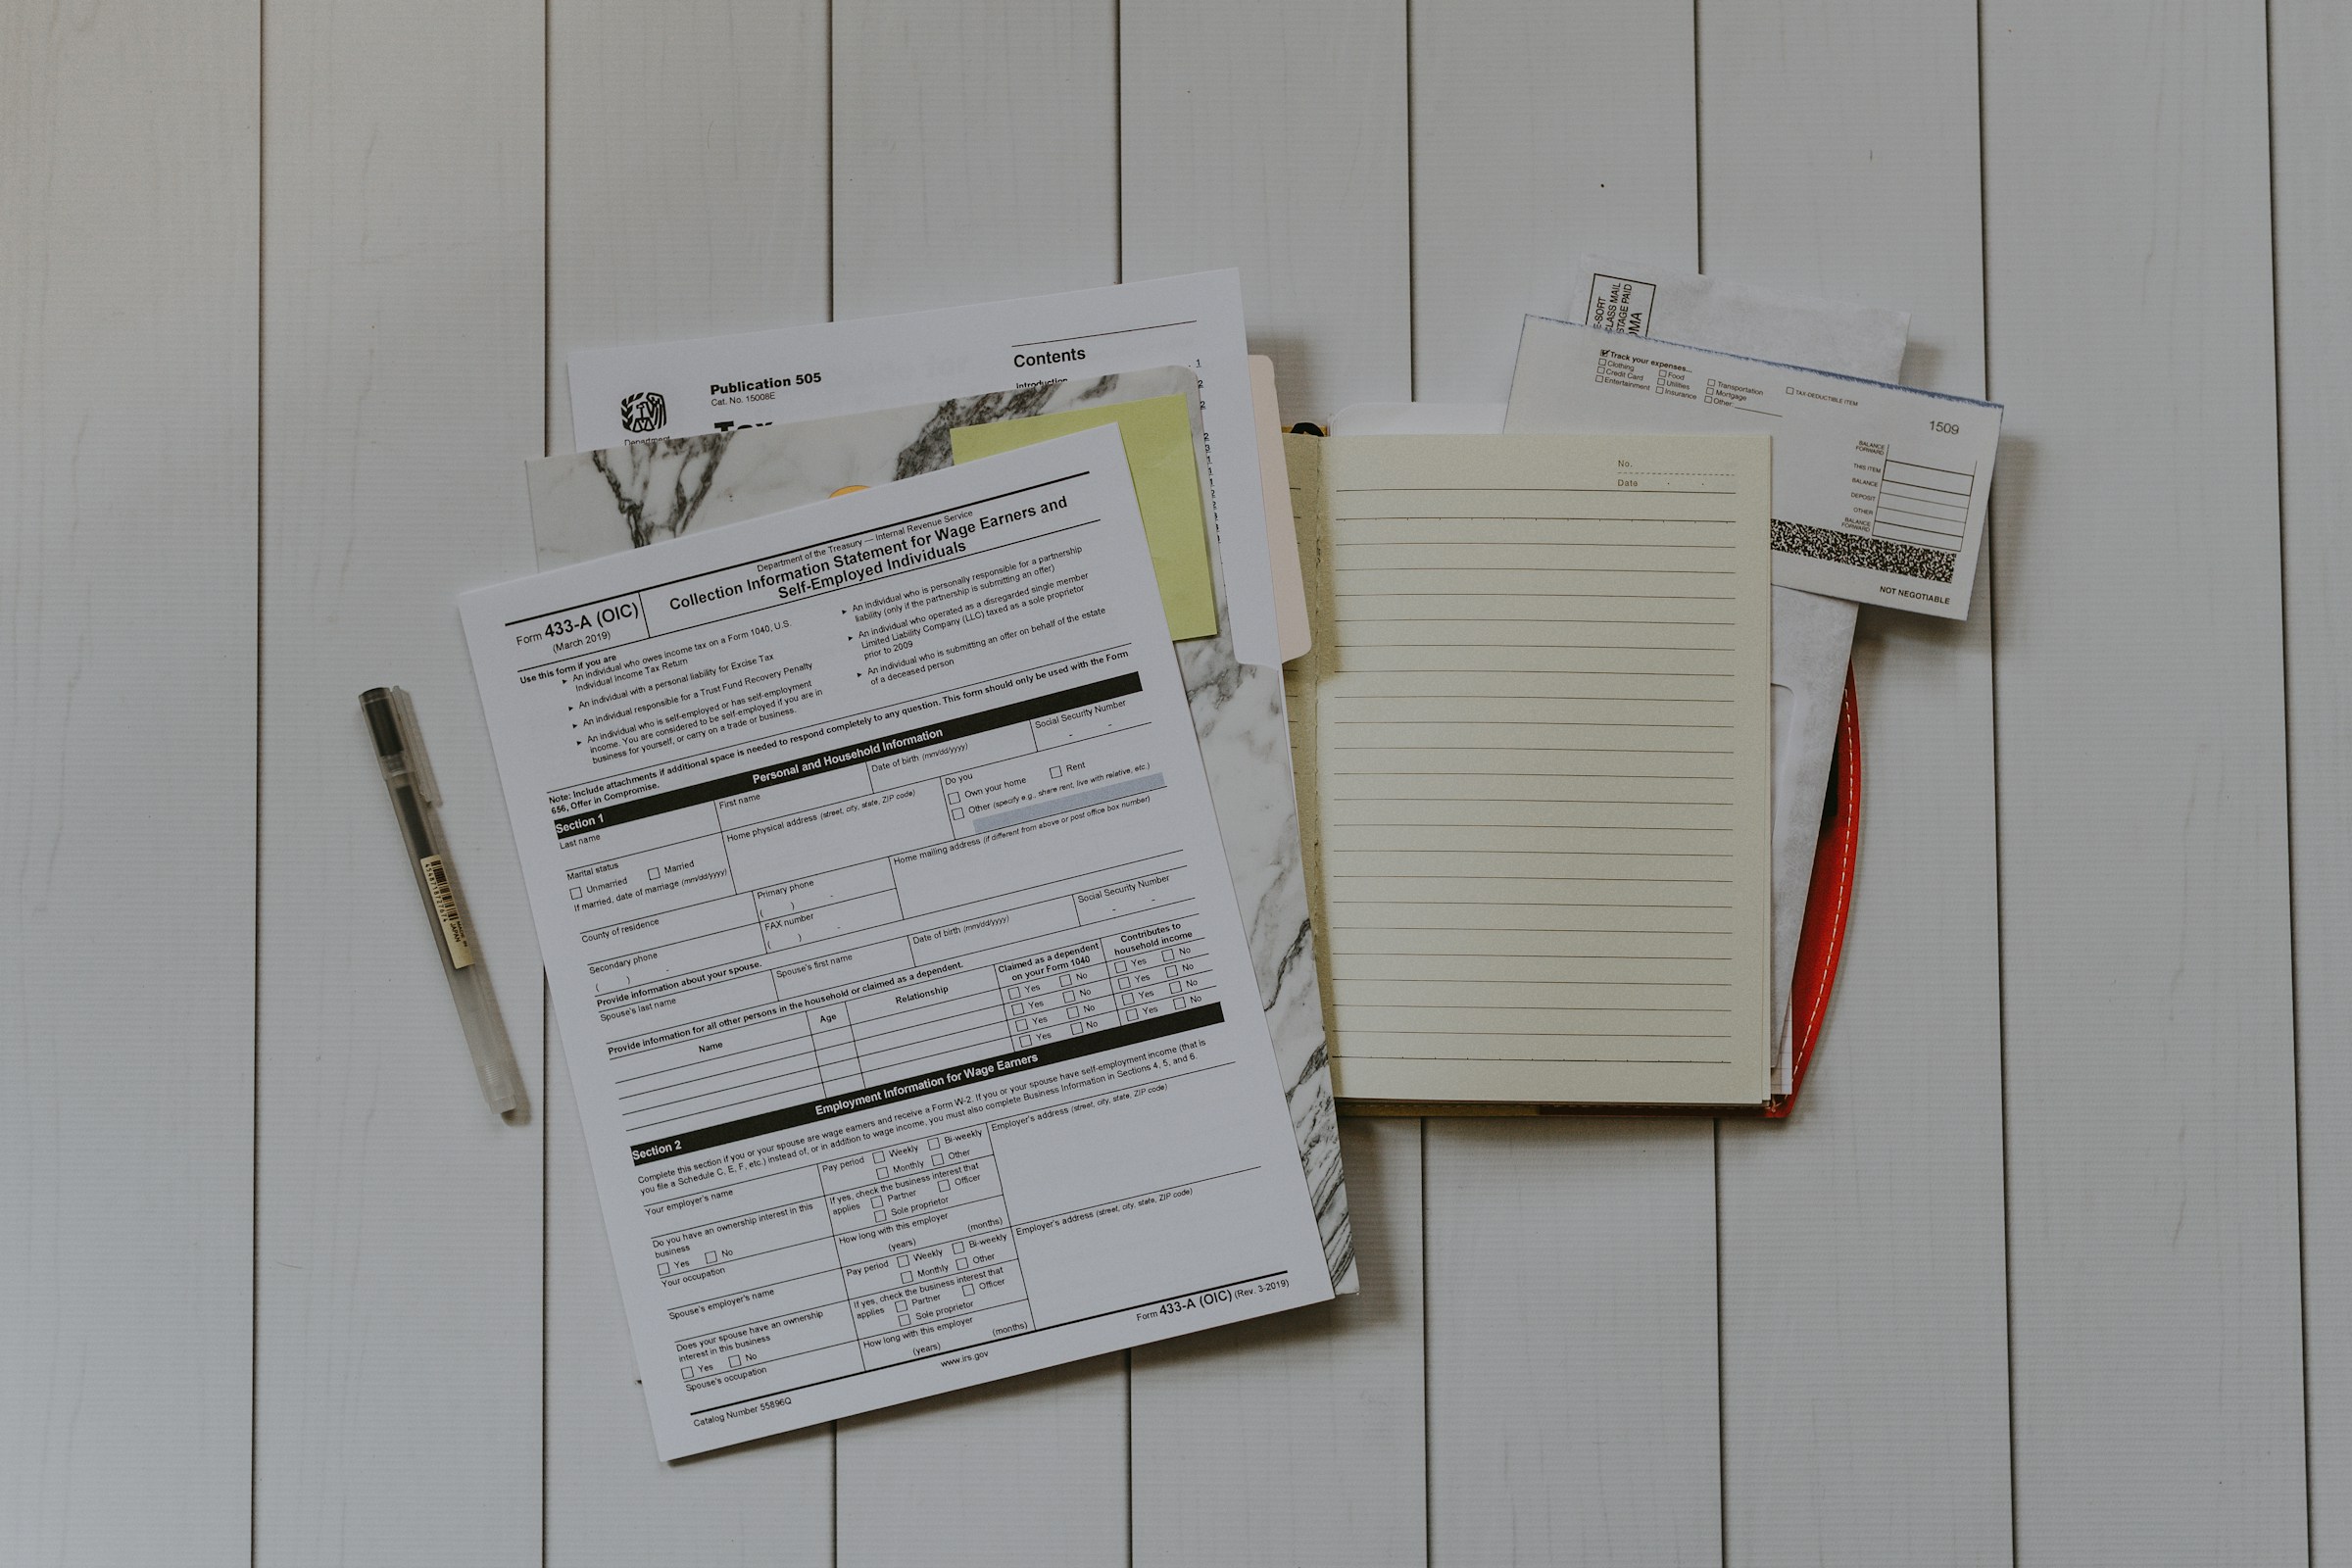 A stack of paperwork | Source: Unsplash